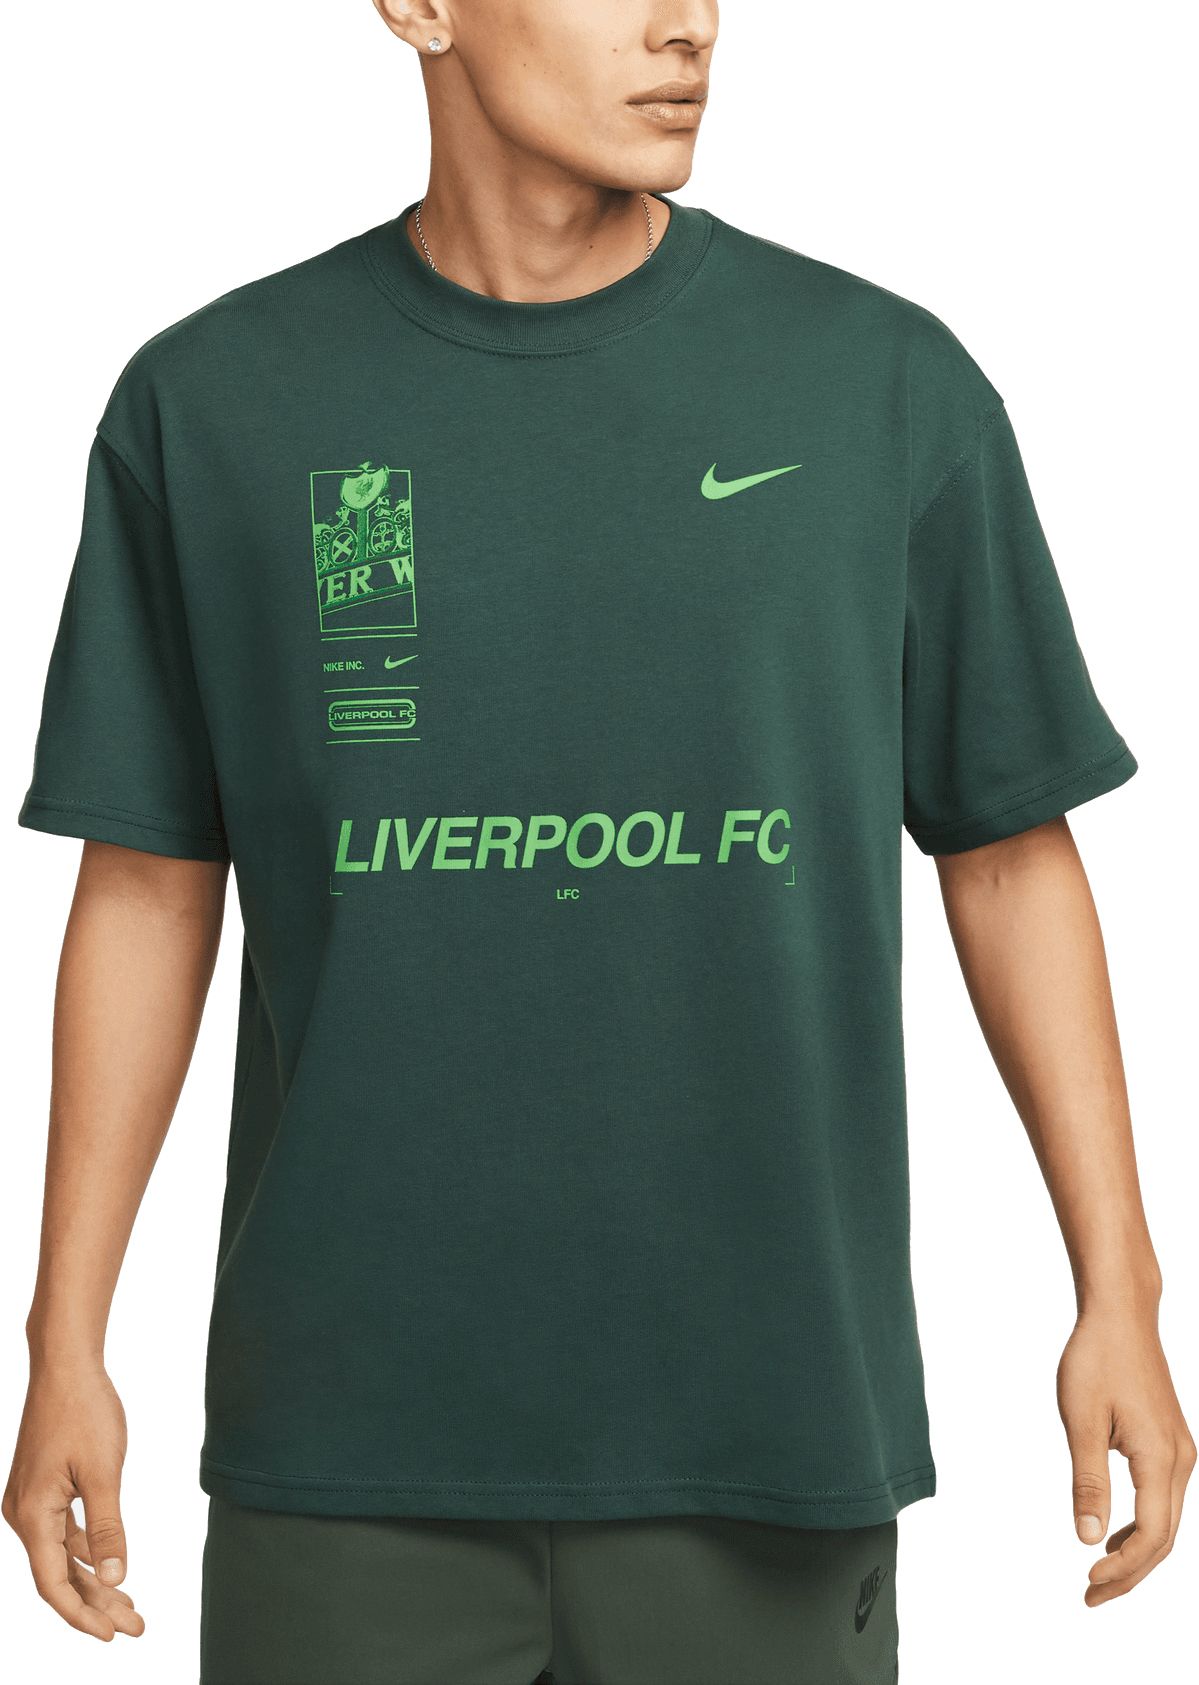 liverpool fc next season kit